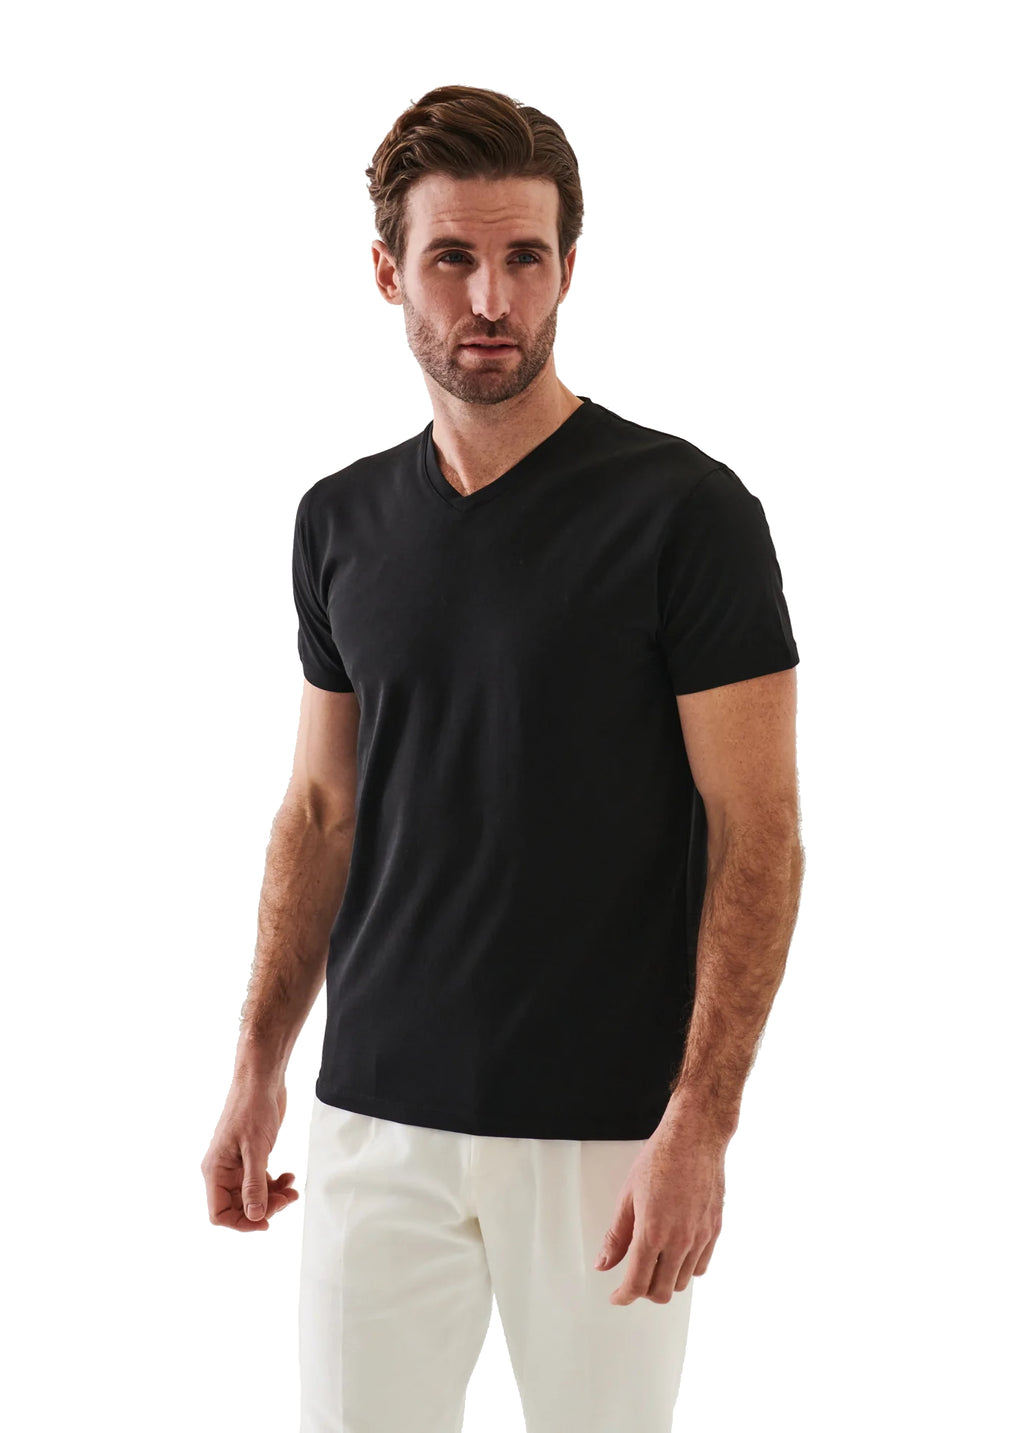 Patrick Assaraf Peruvian Pima Cotton Short Sleeve V-Neck T-Shirt ...